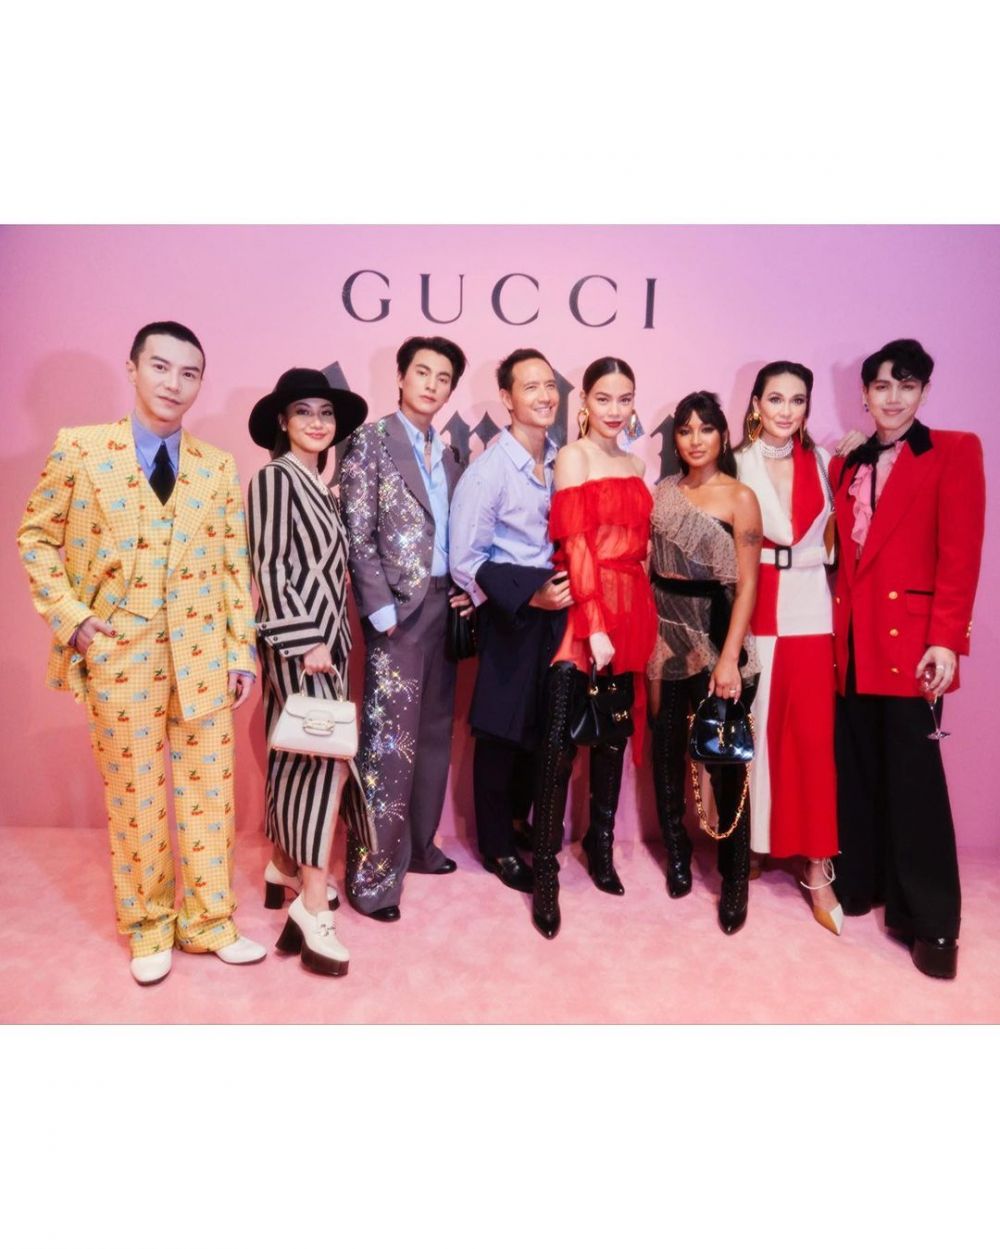 10 Pesona Gulf Kanawut di Event Gucci, Bikin Resah Fans Indonesia!